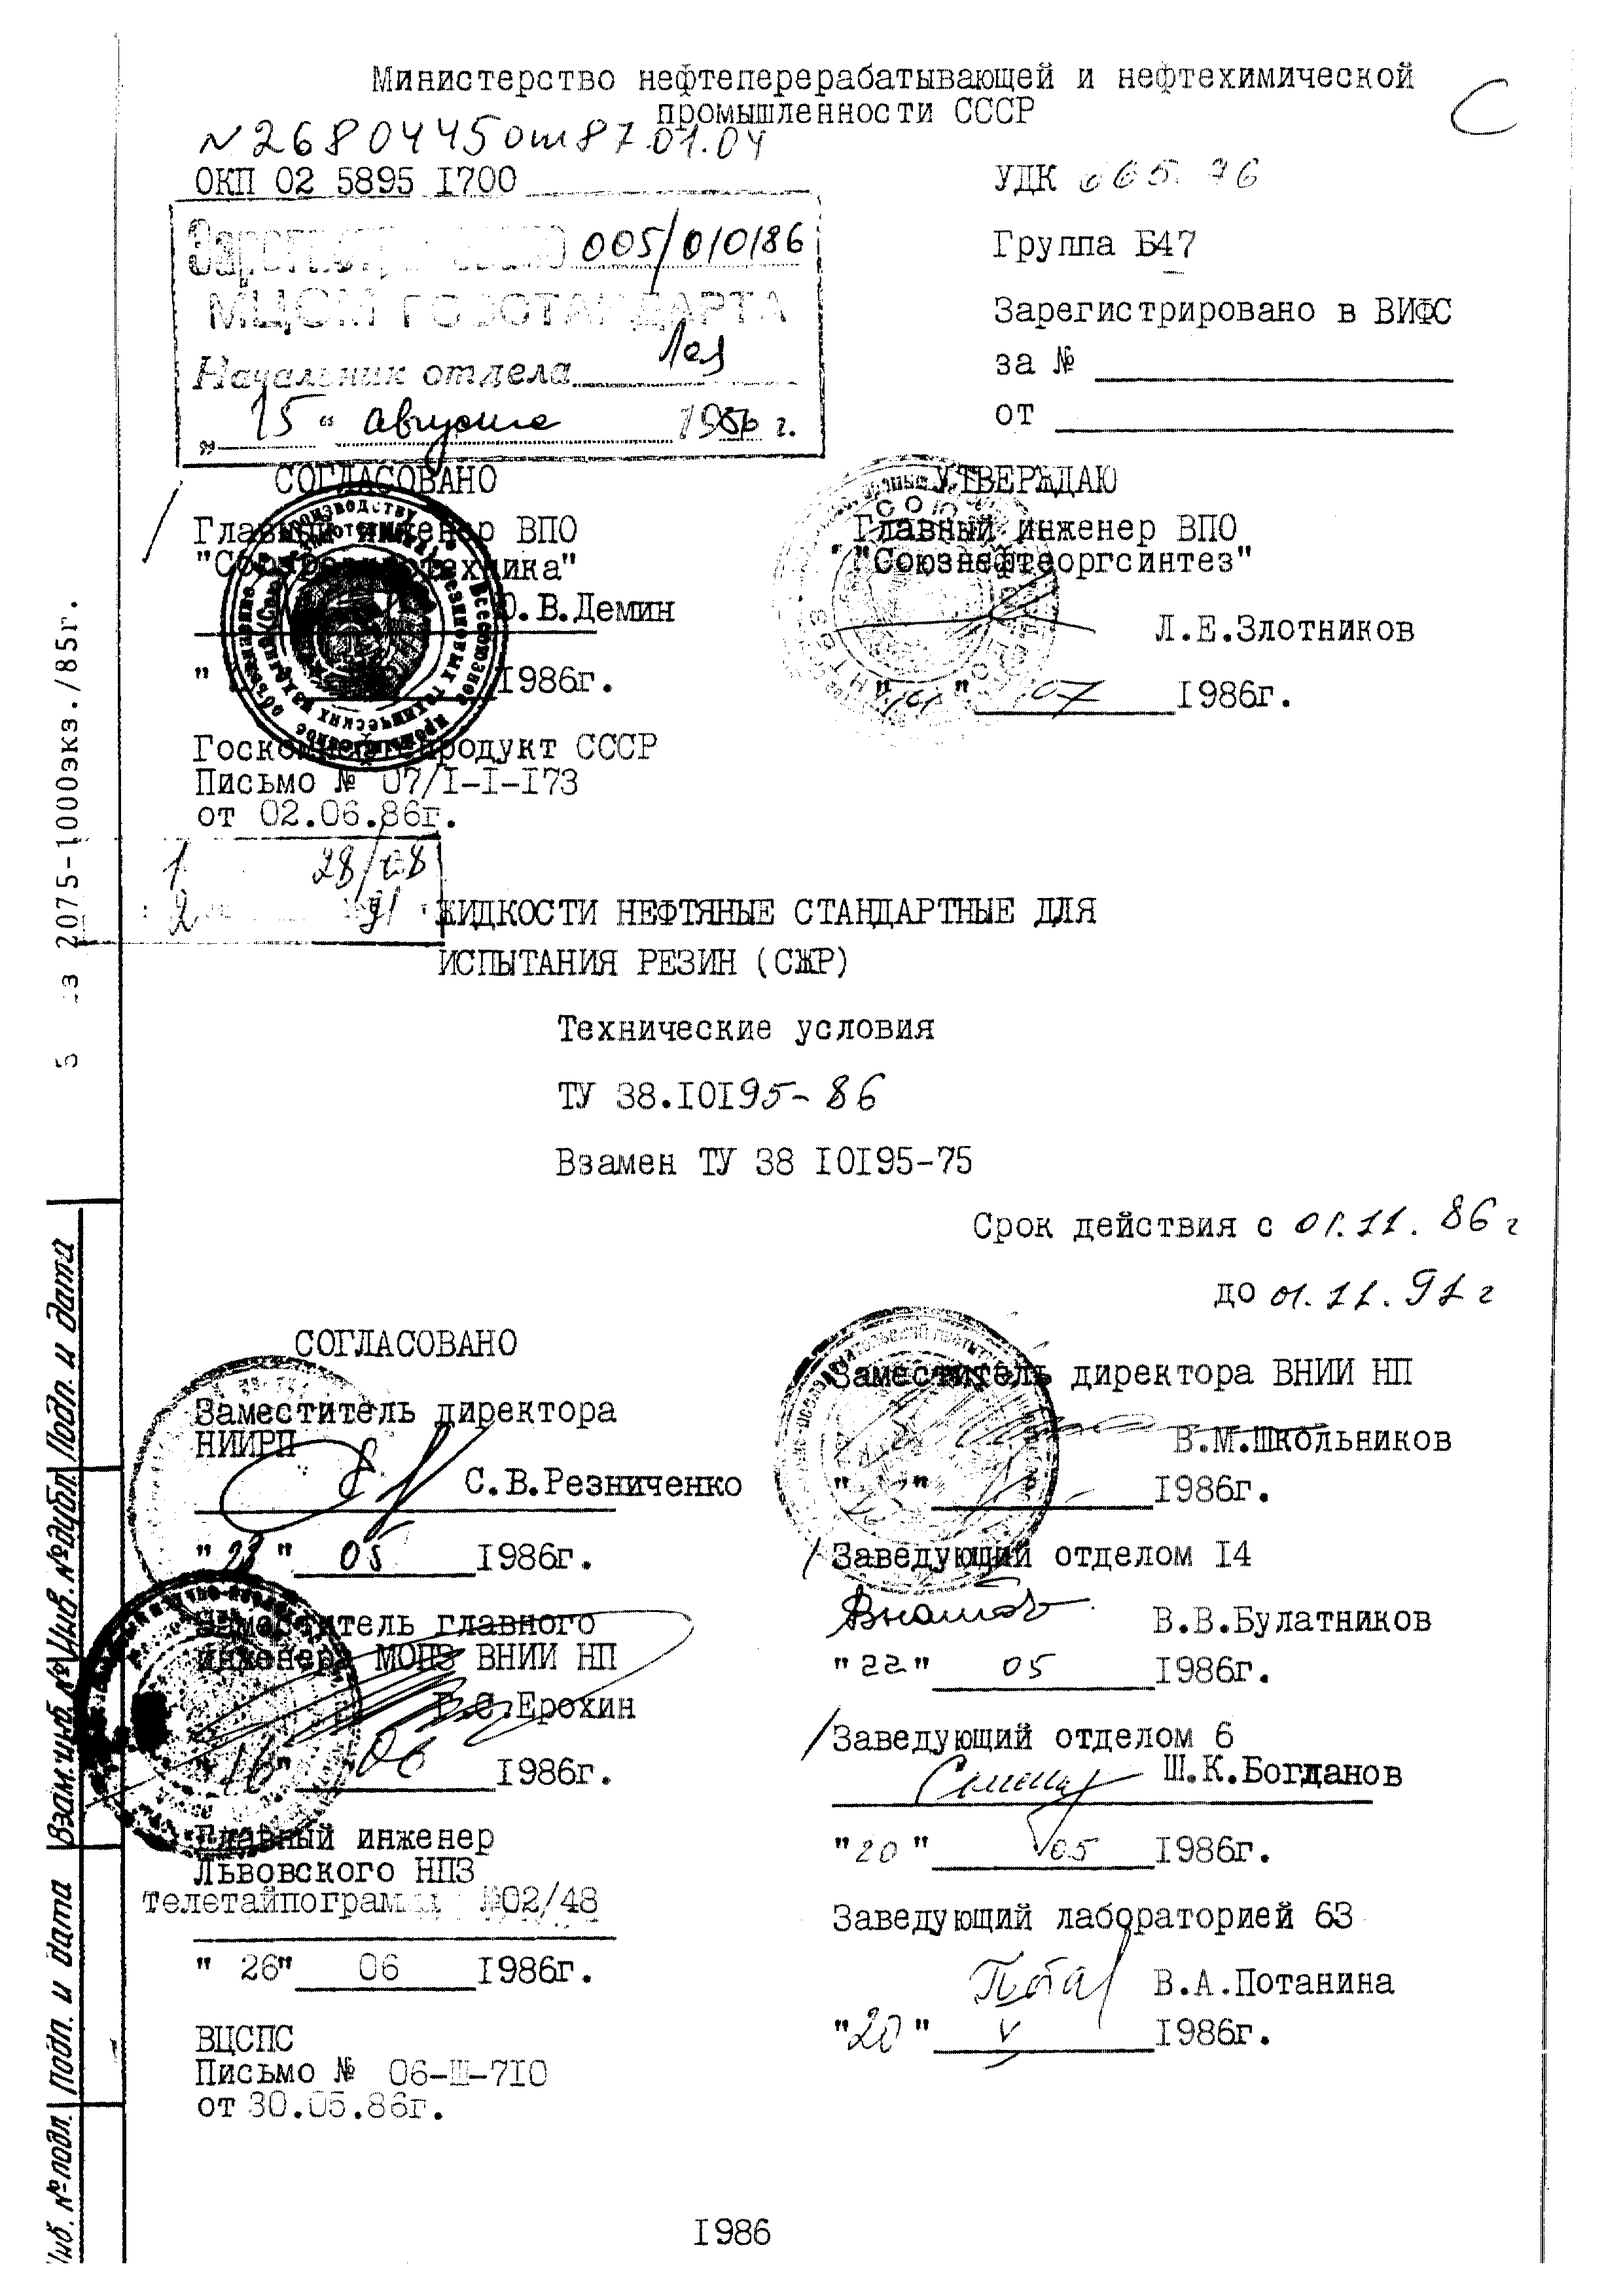 ТУ 38.10195-86